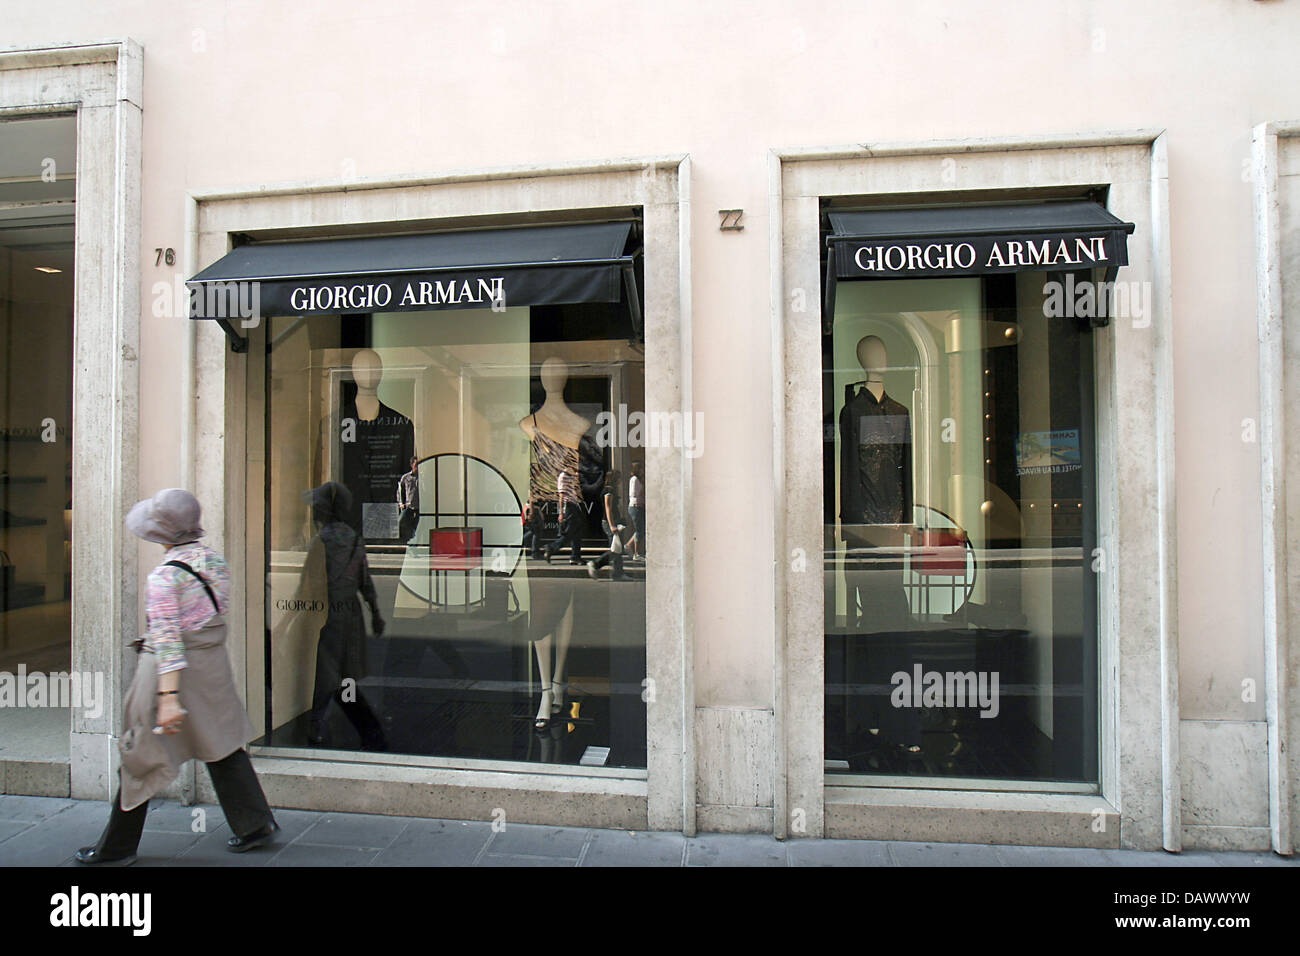 A Giorgio Armani shop is pictured in Rome, Italy, 17 April 2007. Photo:  Lars Halbauer Stock Photo - Alamy